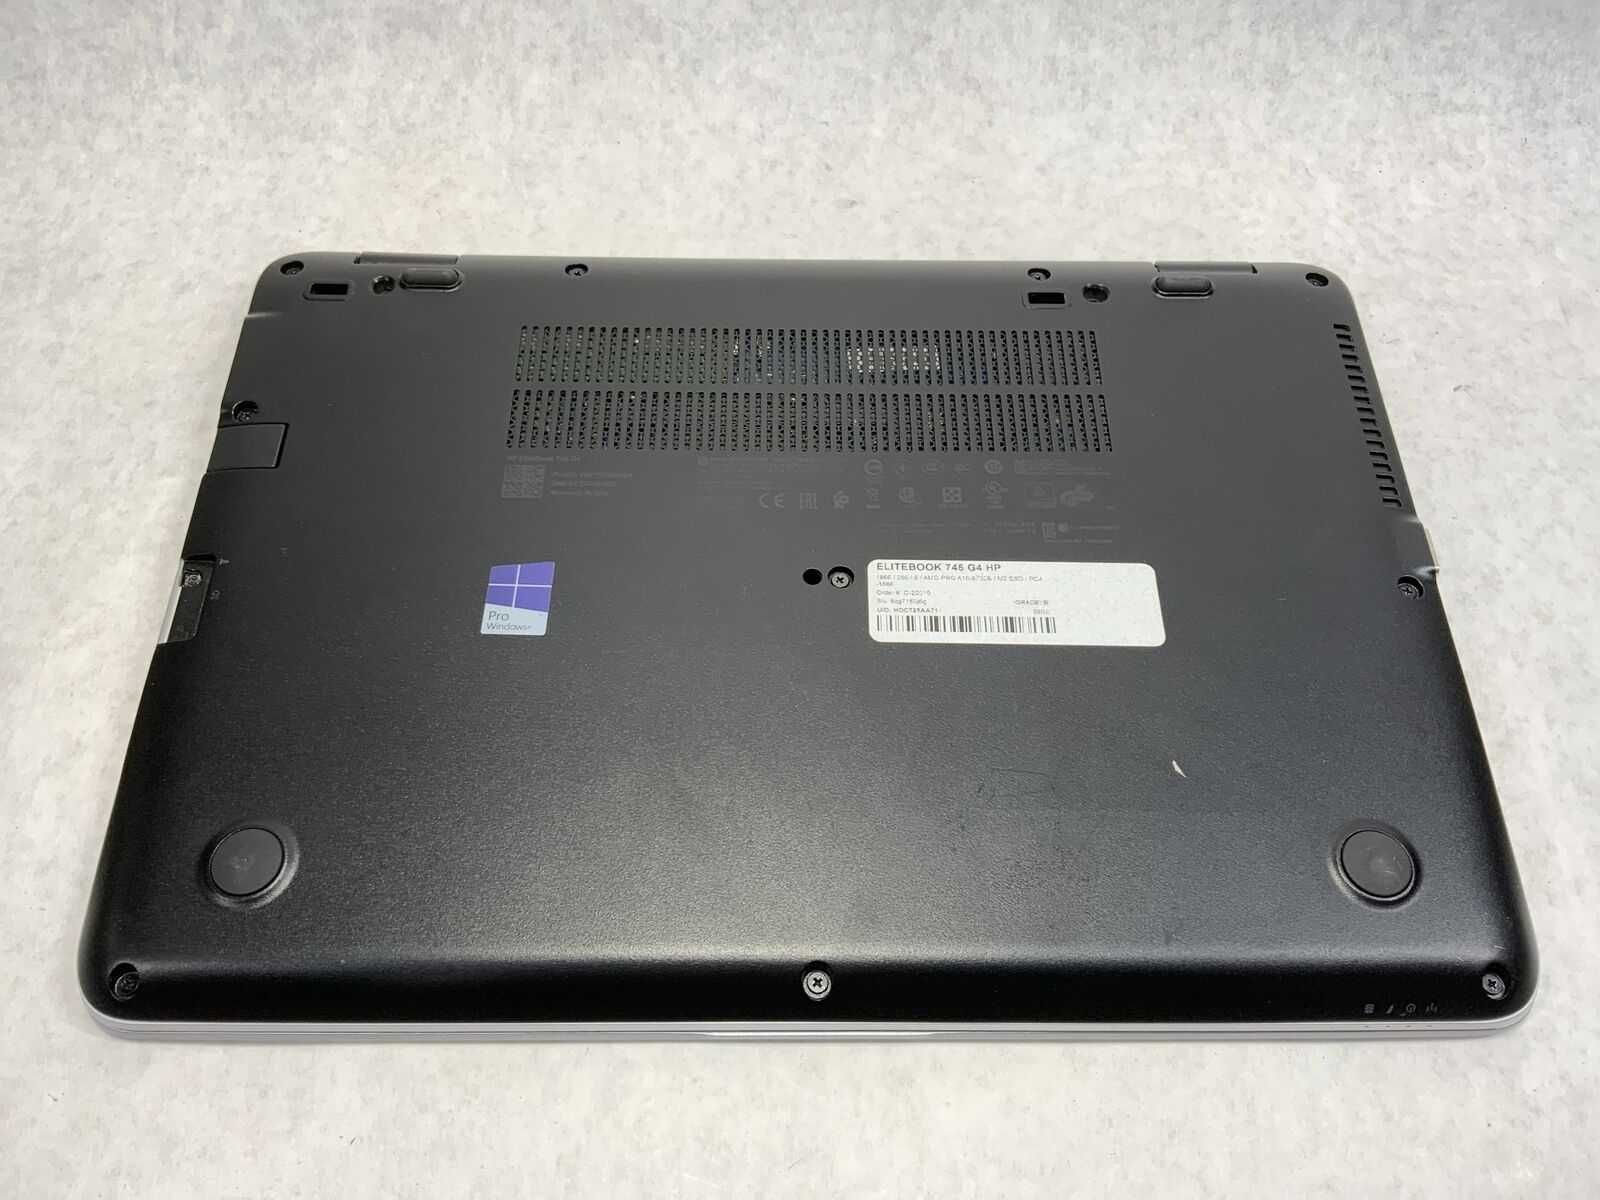 Лаптоп HP 745 G4 A10-8700B 8GB 256GB SSD AMD R6 Graphics с Windows 10